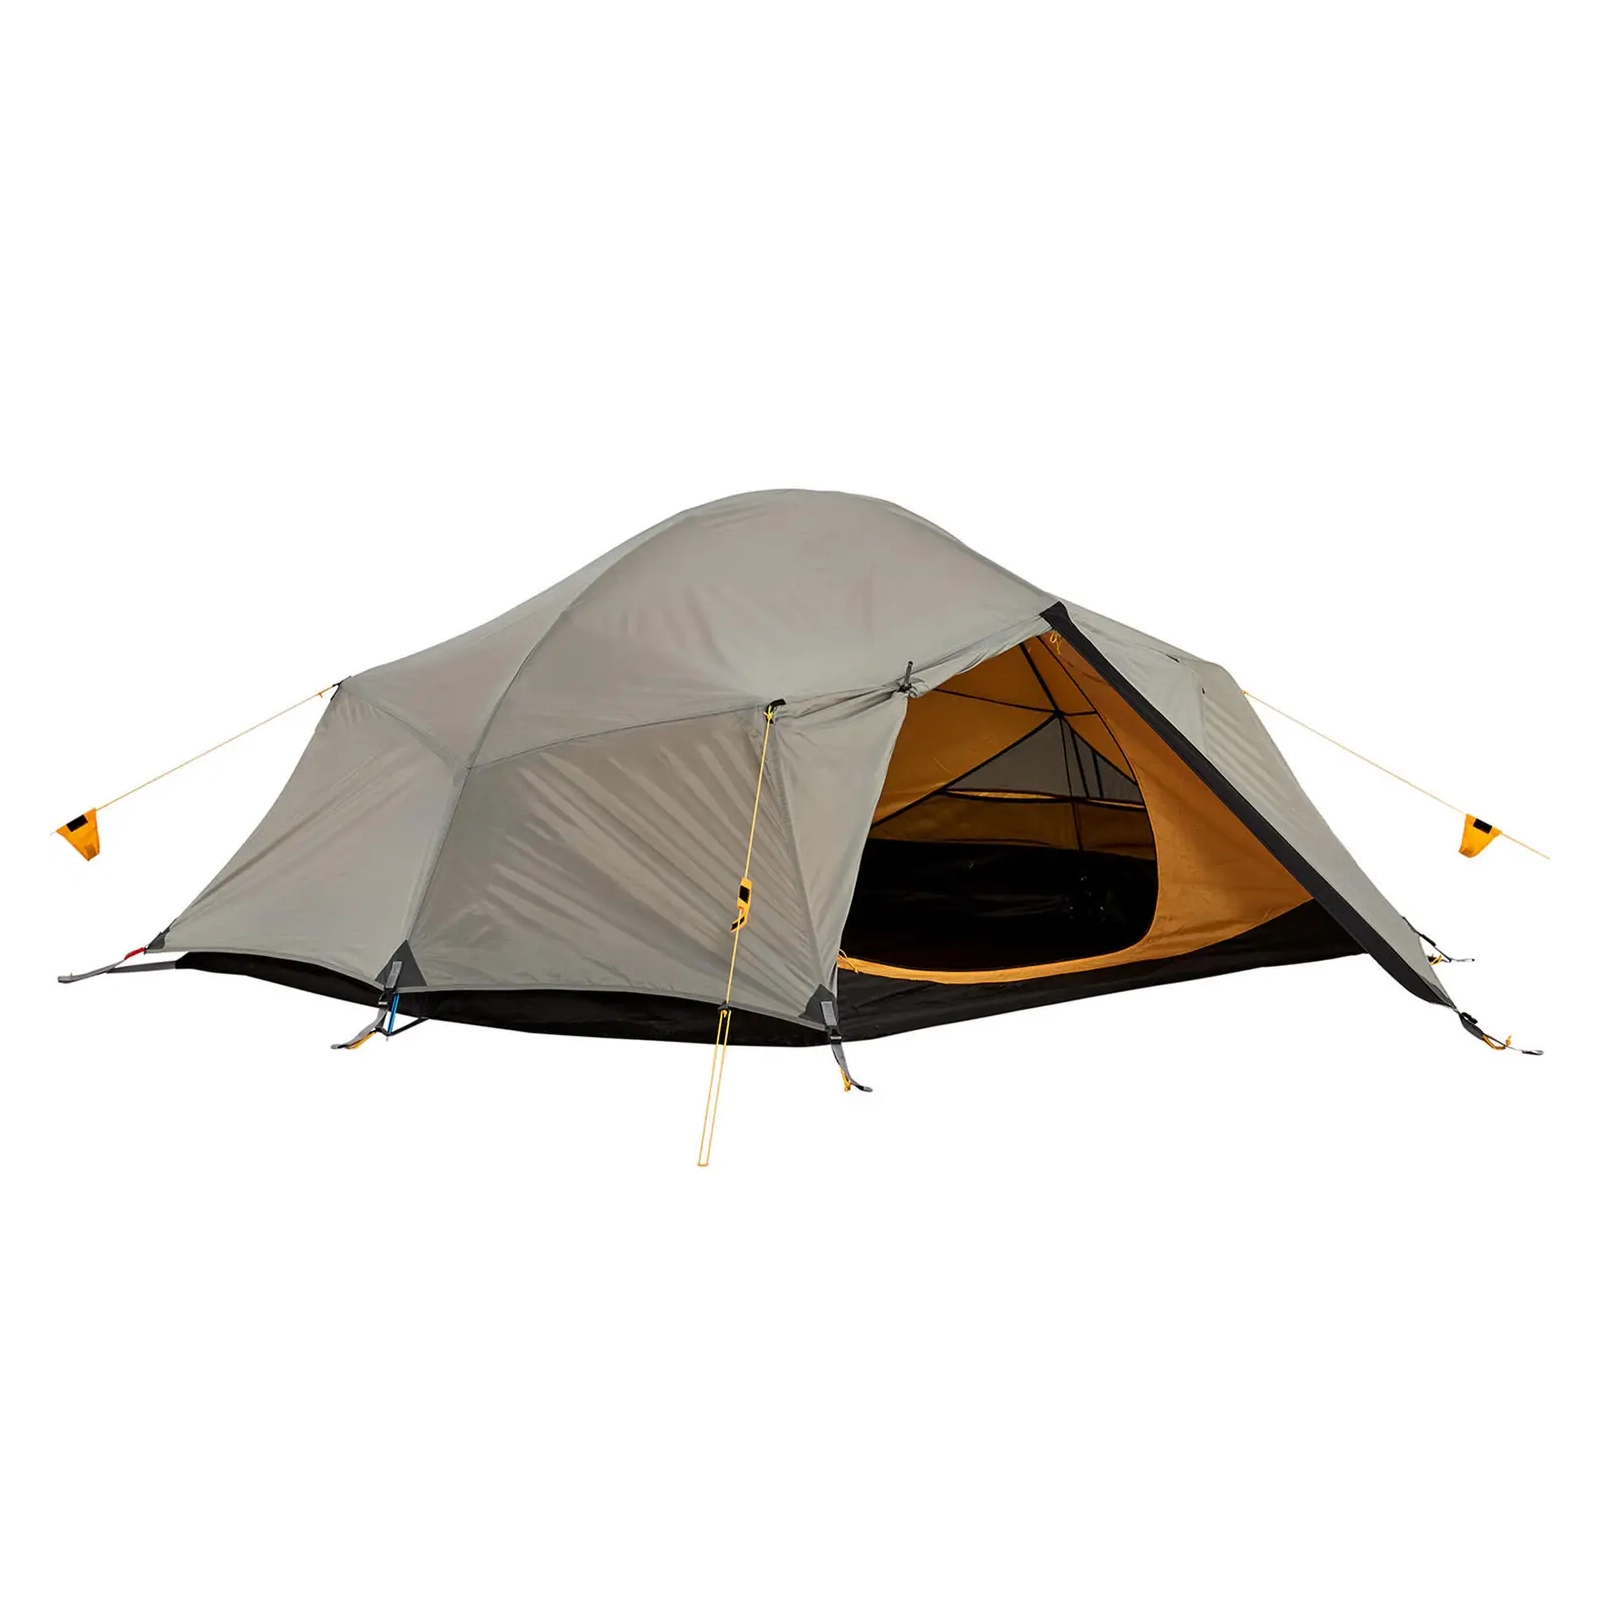 Палатка Wechsel Venture 3 TL Laurel Oak (231072)